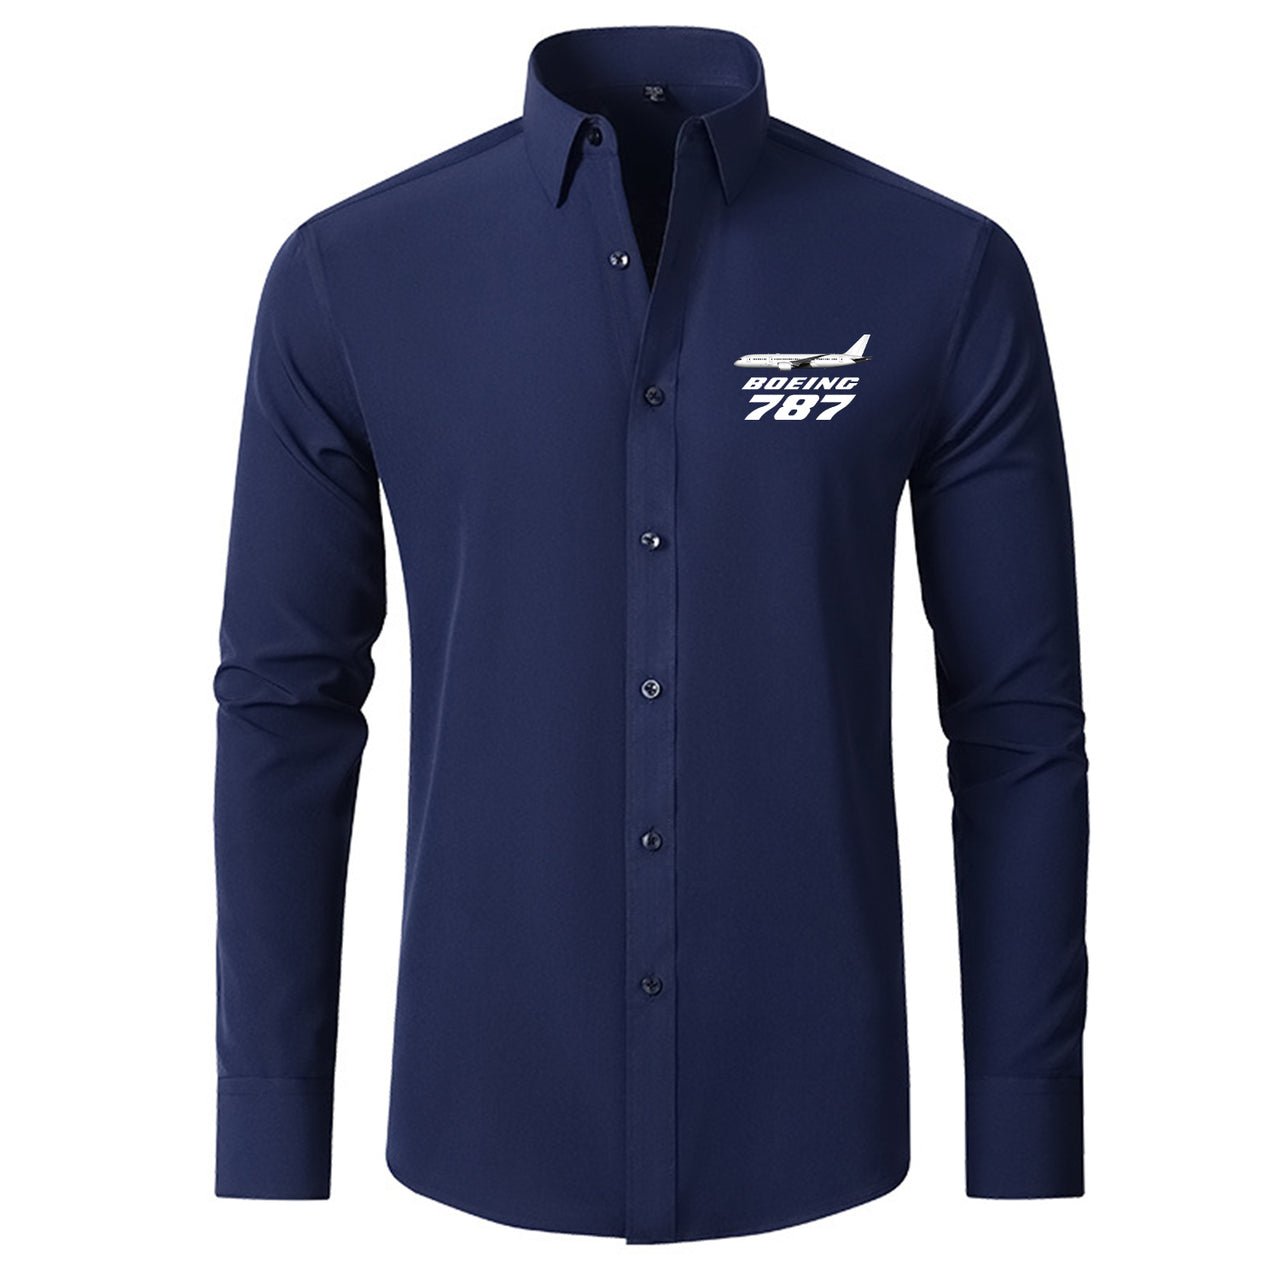 The Boeing 787 Designed Long Sleeve Shirts